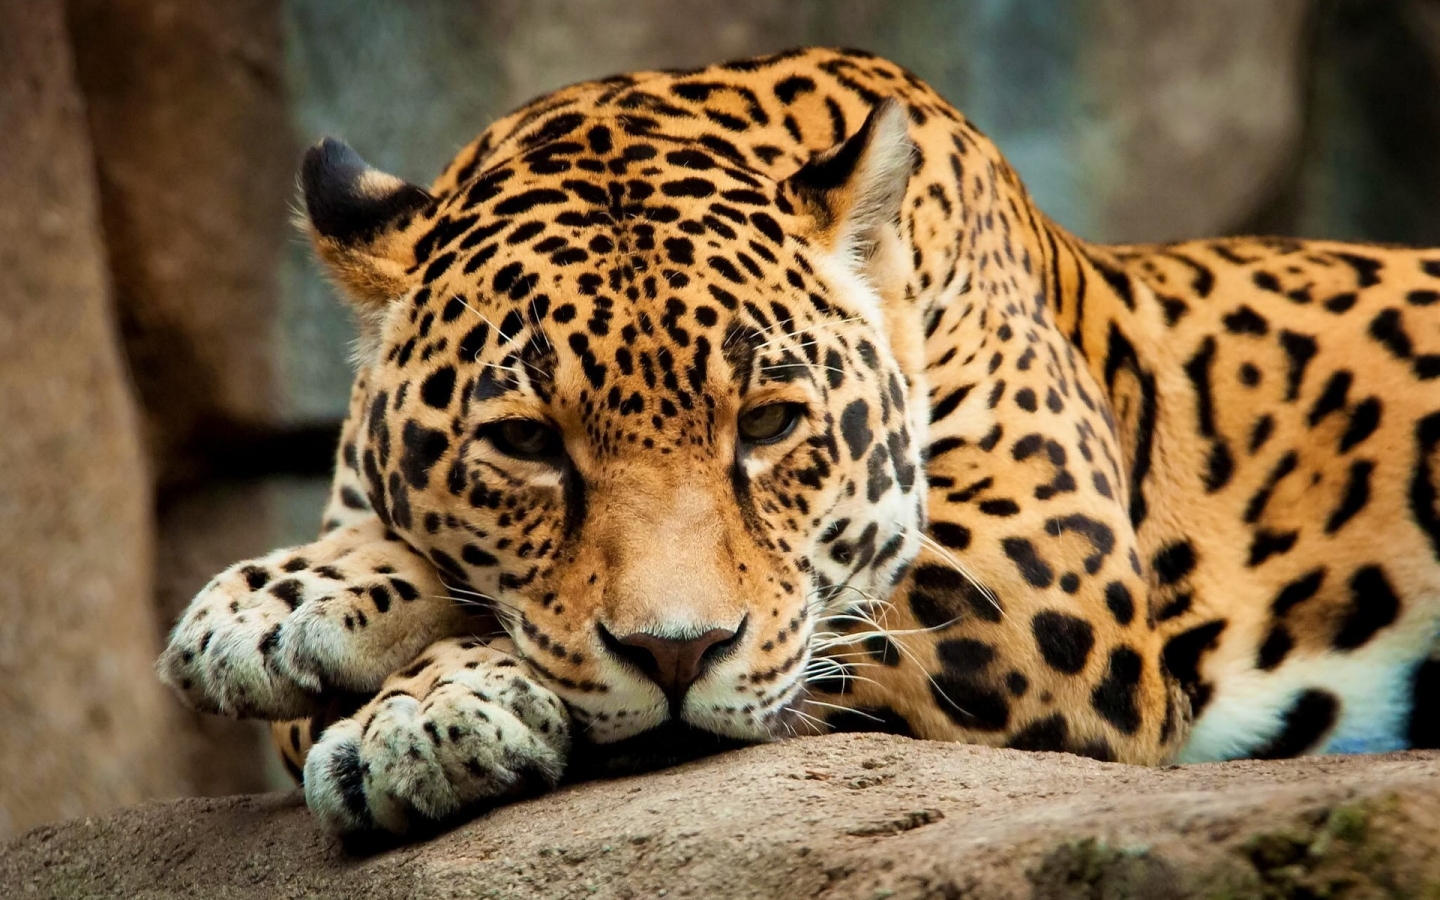 Calm Jaguar for 1440 x 900 widescreen resolution